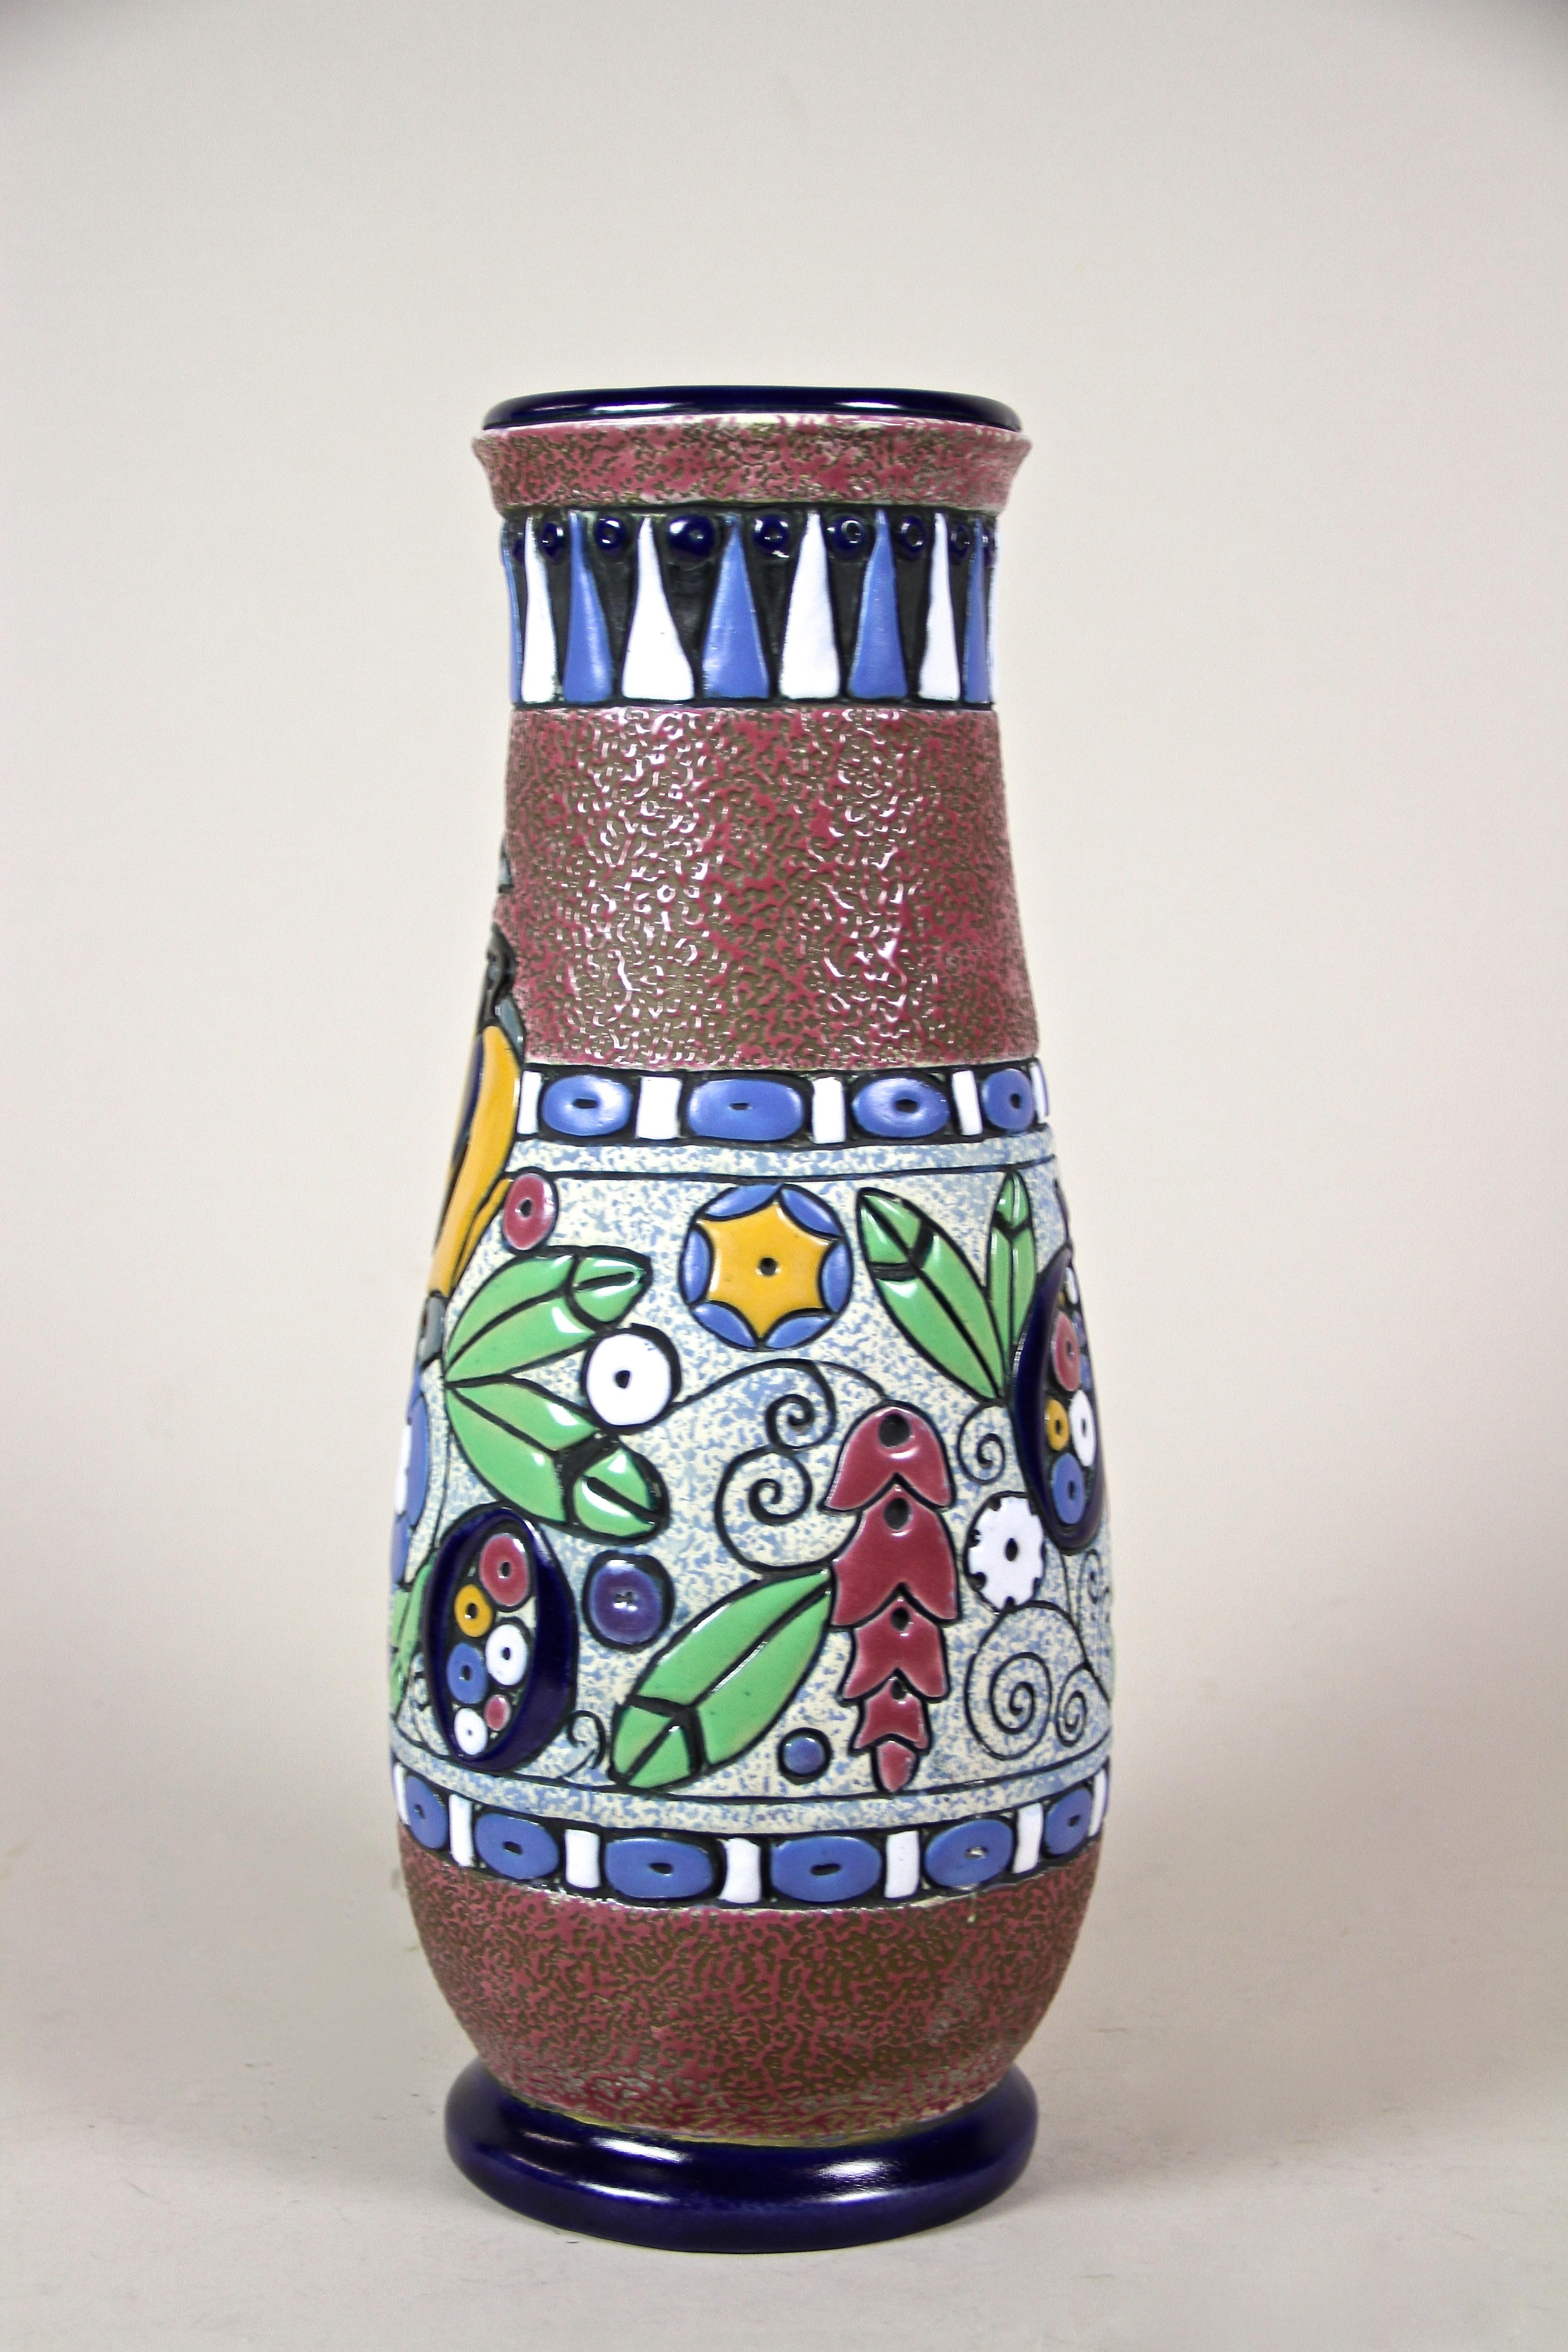 Czech Art Deco Majolica Vase Enamel Painted by Amphora CZ, 20th Century, circa 1920